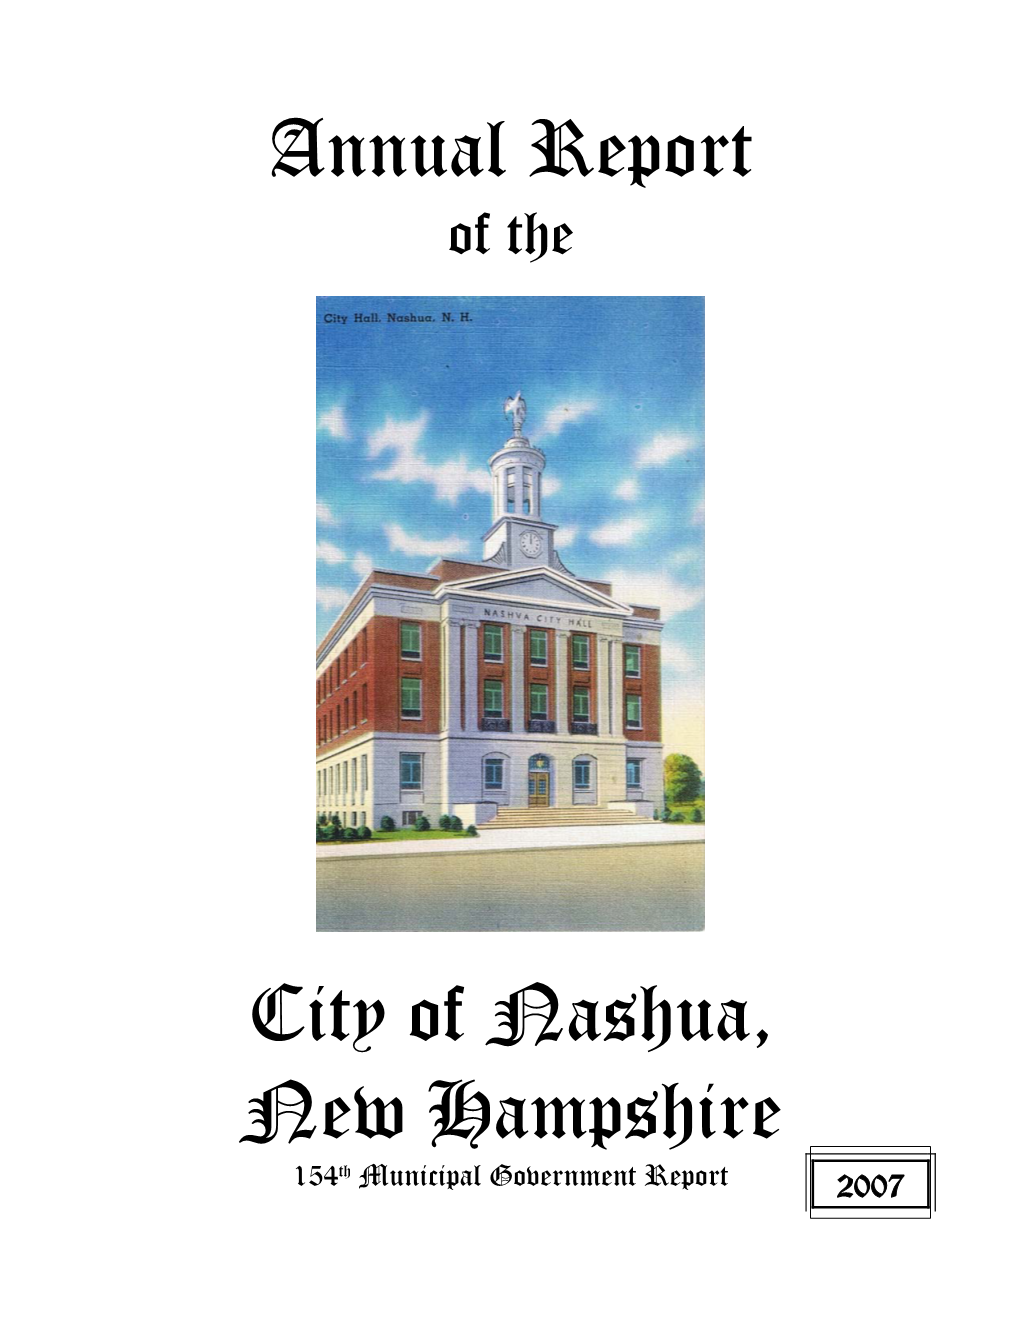 Annual Report City of Nashua, New Hampshire